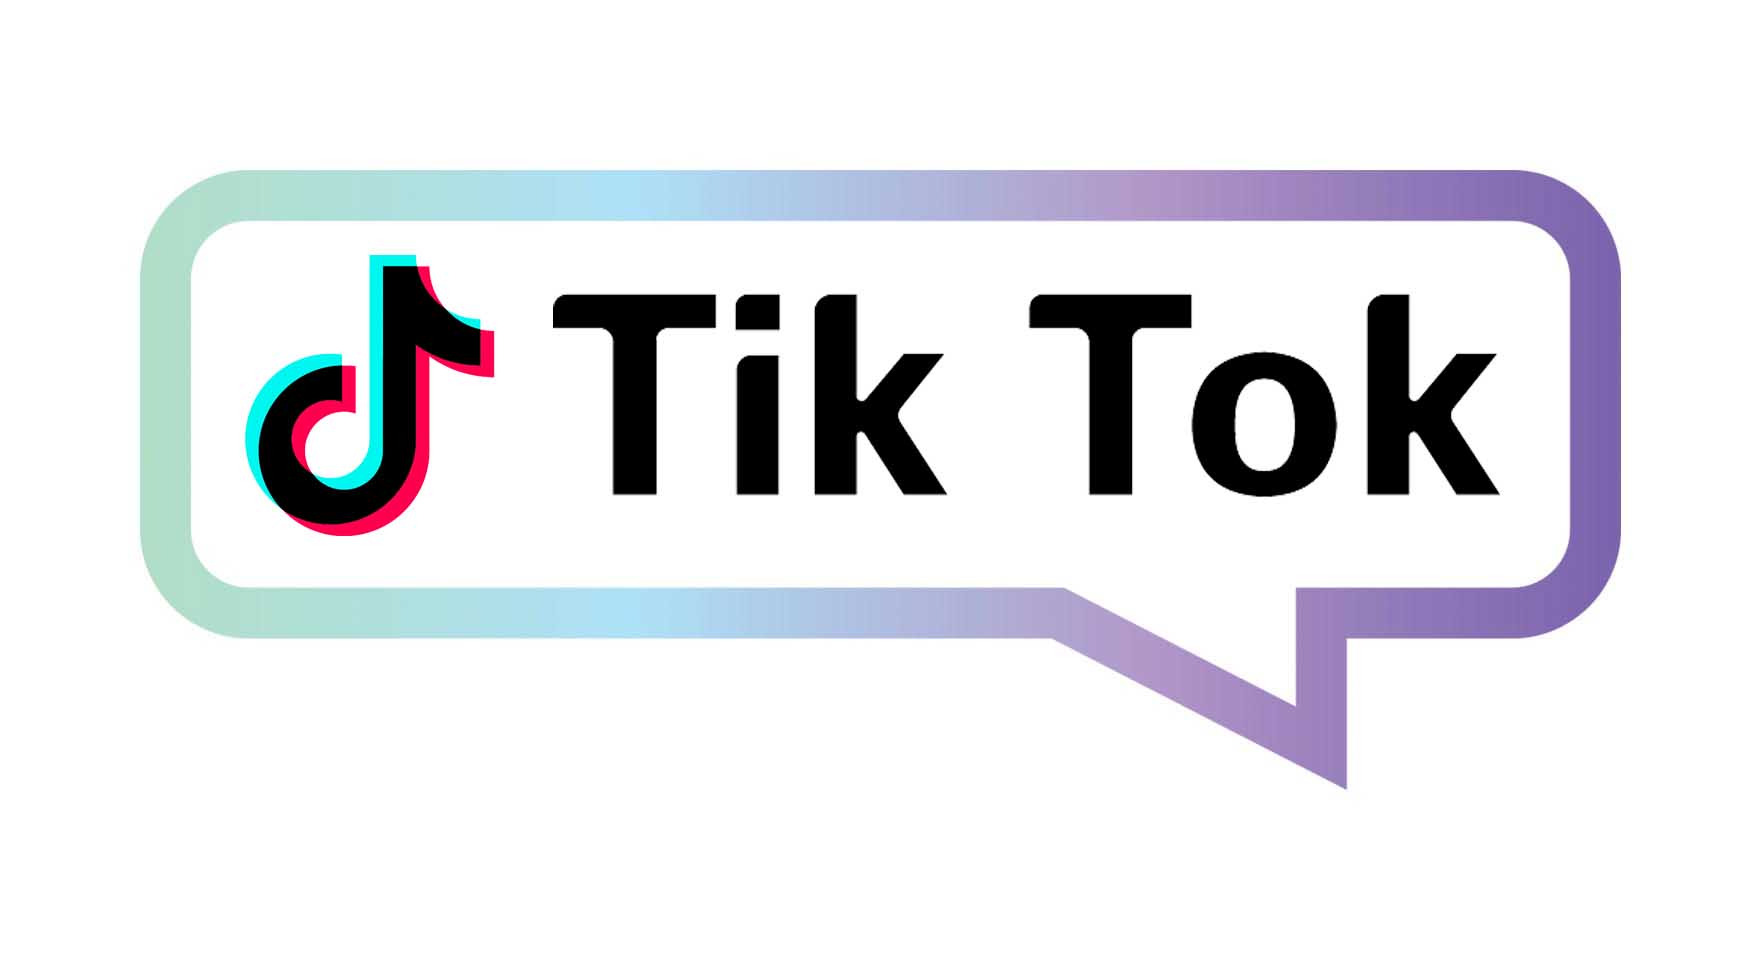 Reddit CEO Calls TikTok “Fundamentally Parasitic” Spyware